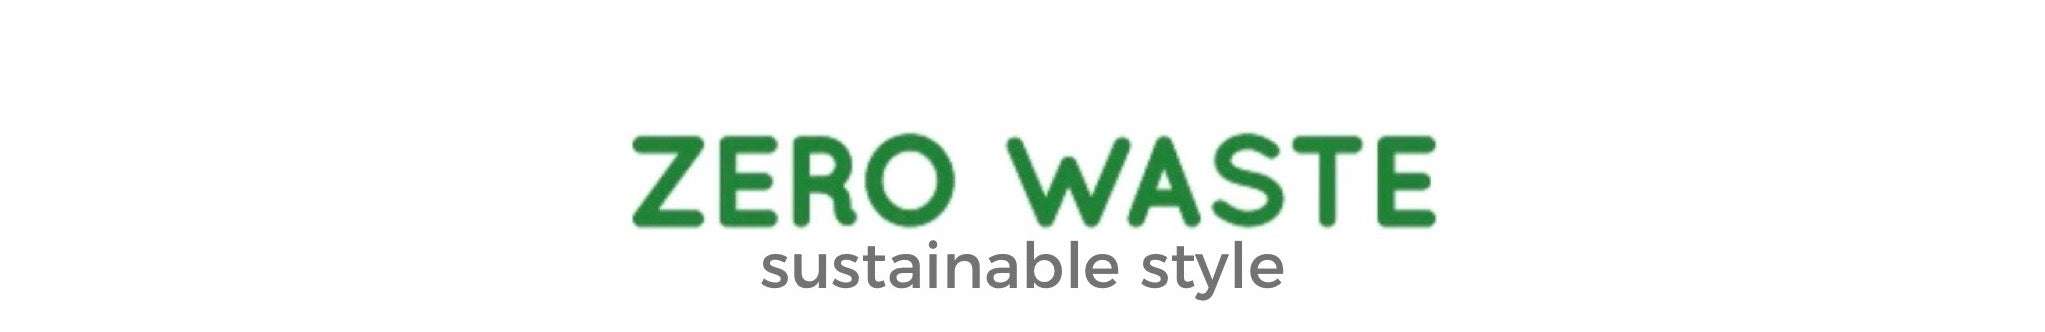 Header text: Zero Waste, sustainable style